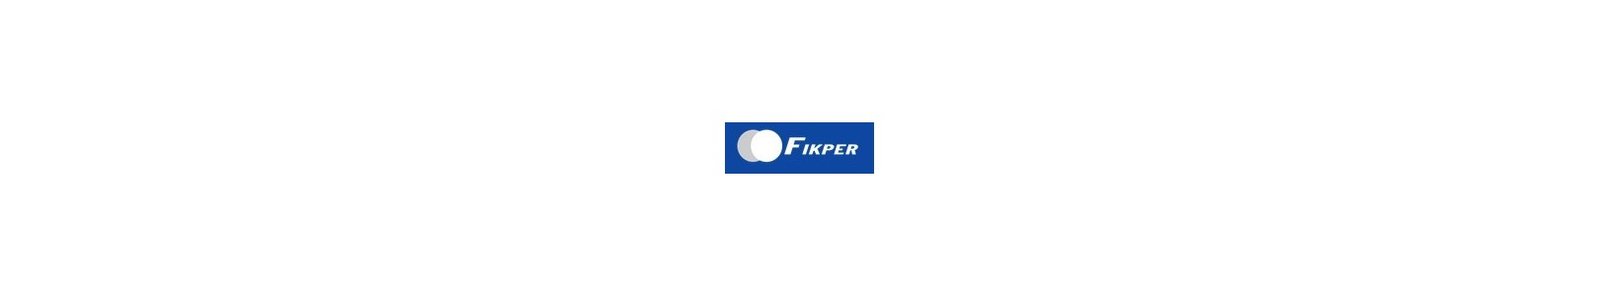 Fikper  Reseller voucher code  india